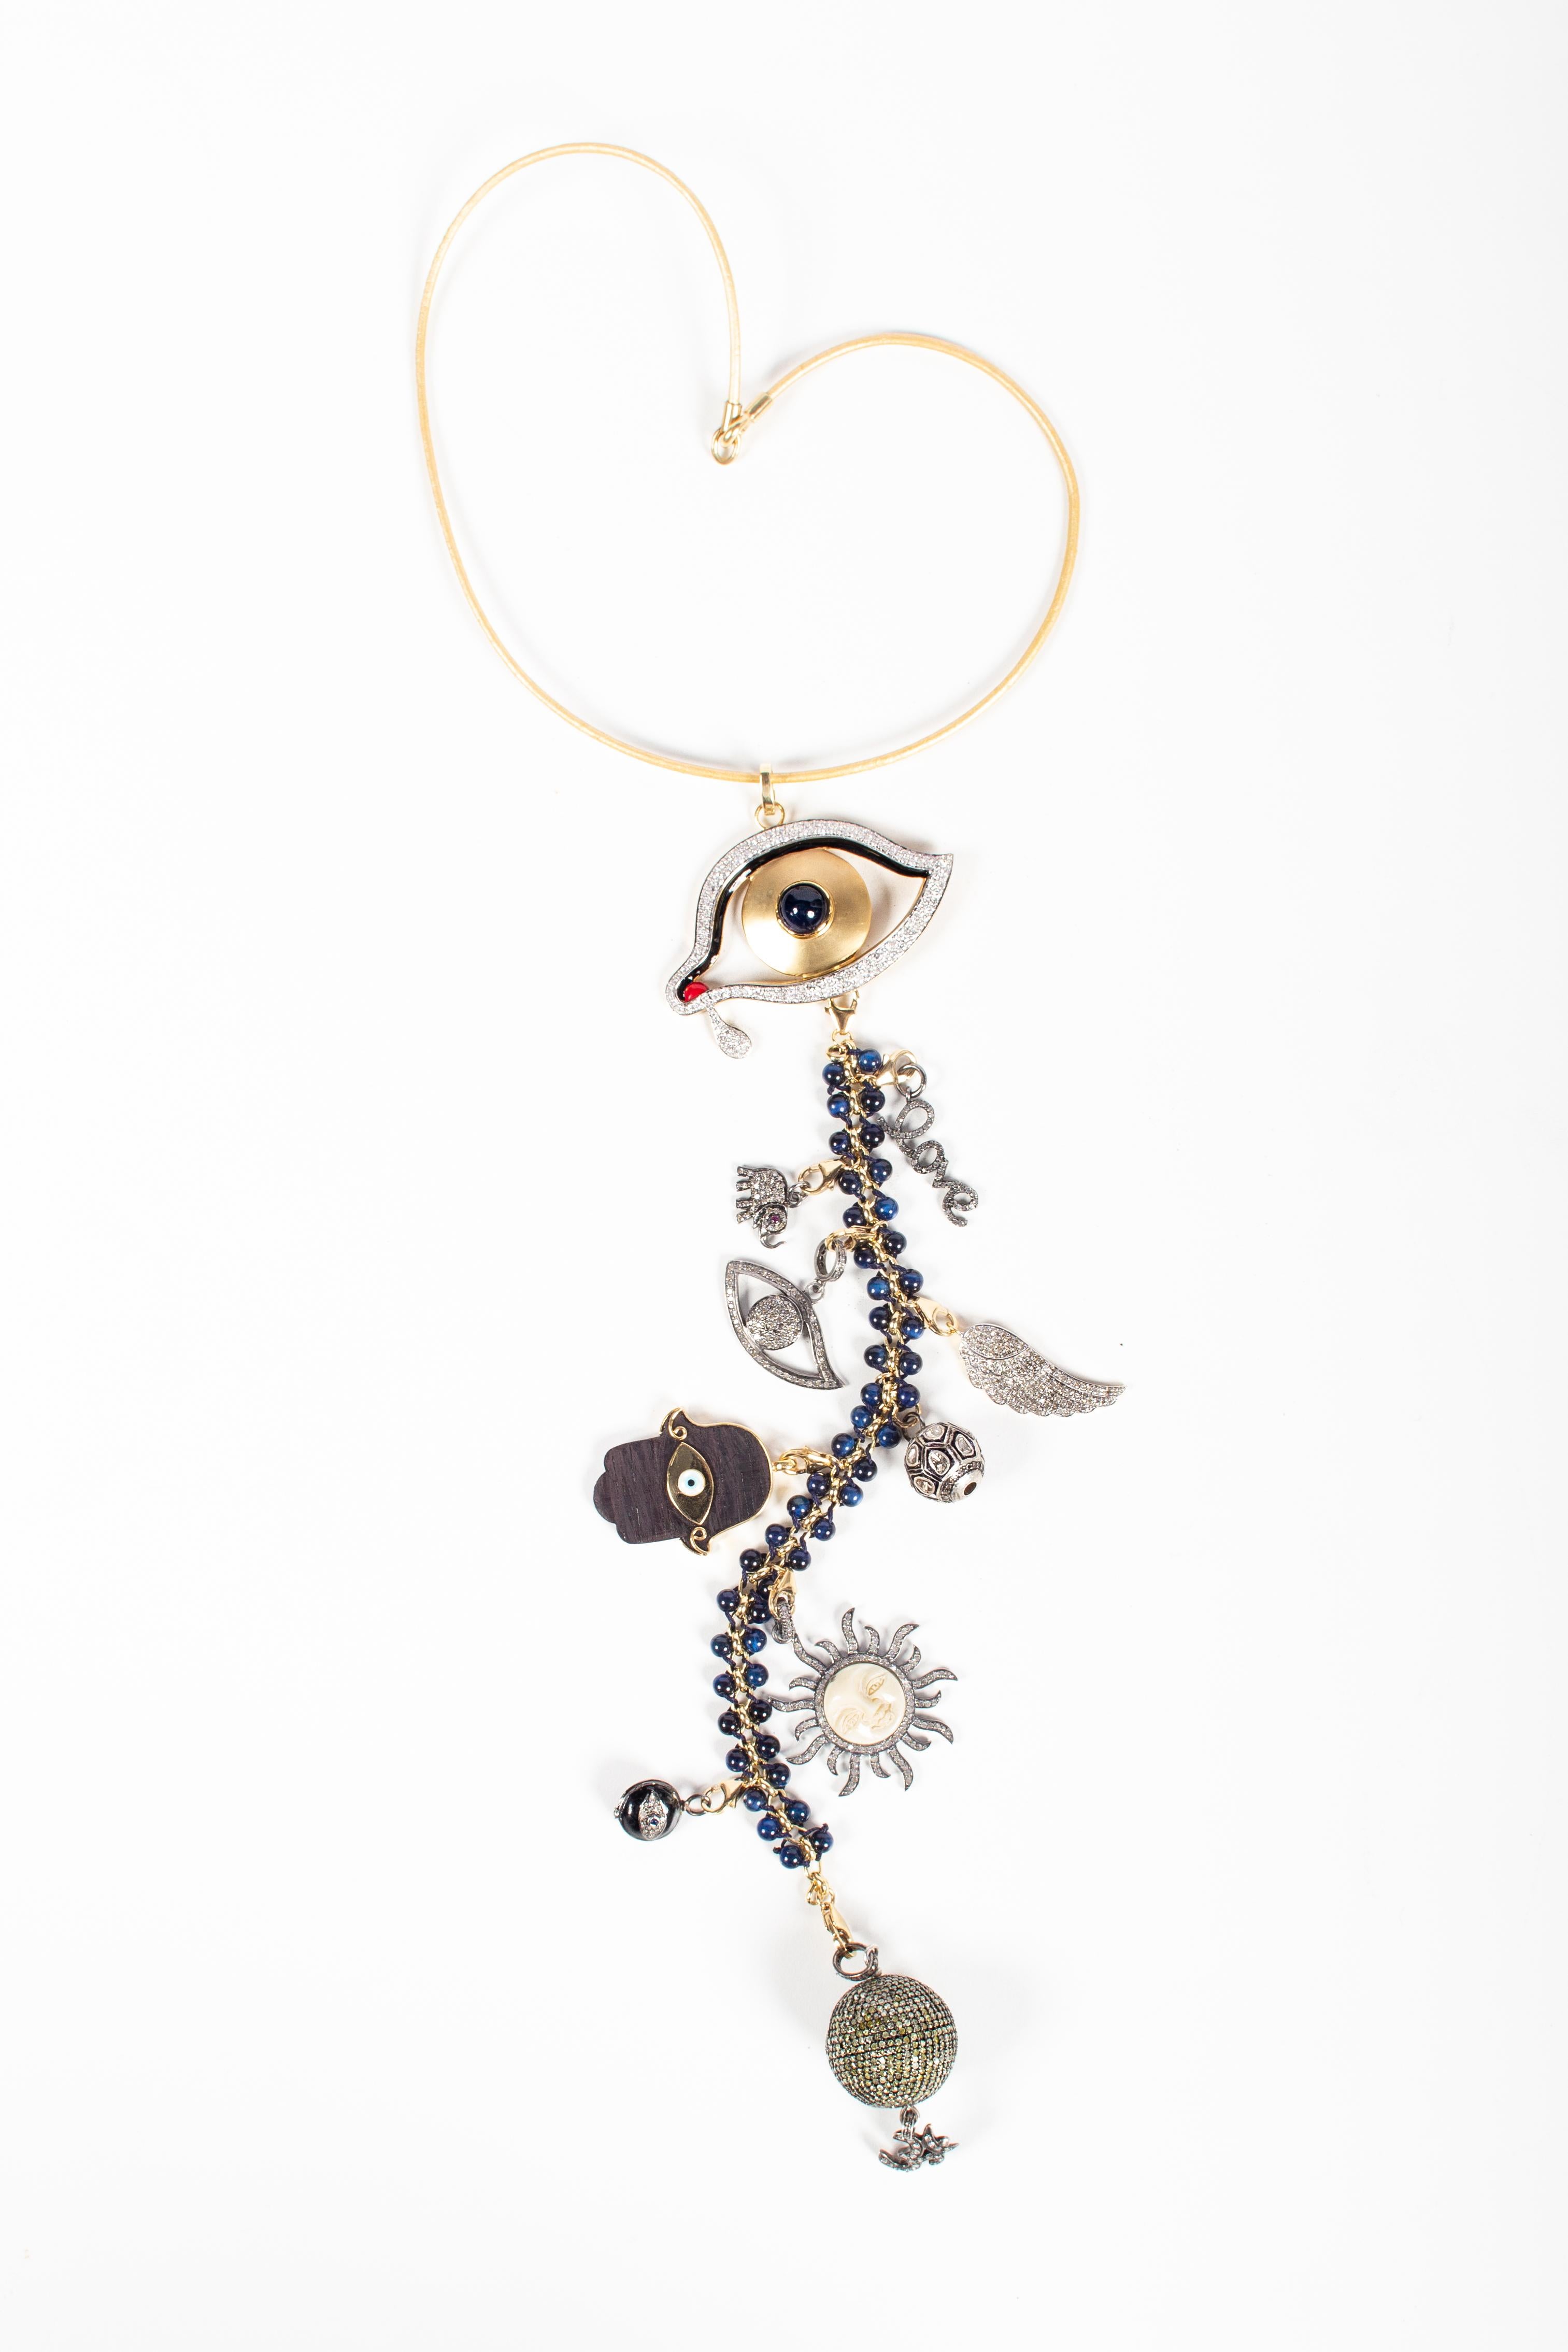 Rose Cut Clarissa Bronfman 'Dali's Girl' Symbol Tree Necklace Sapphire, Diamond, Ebony